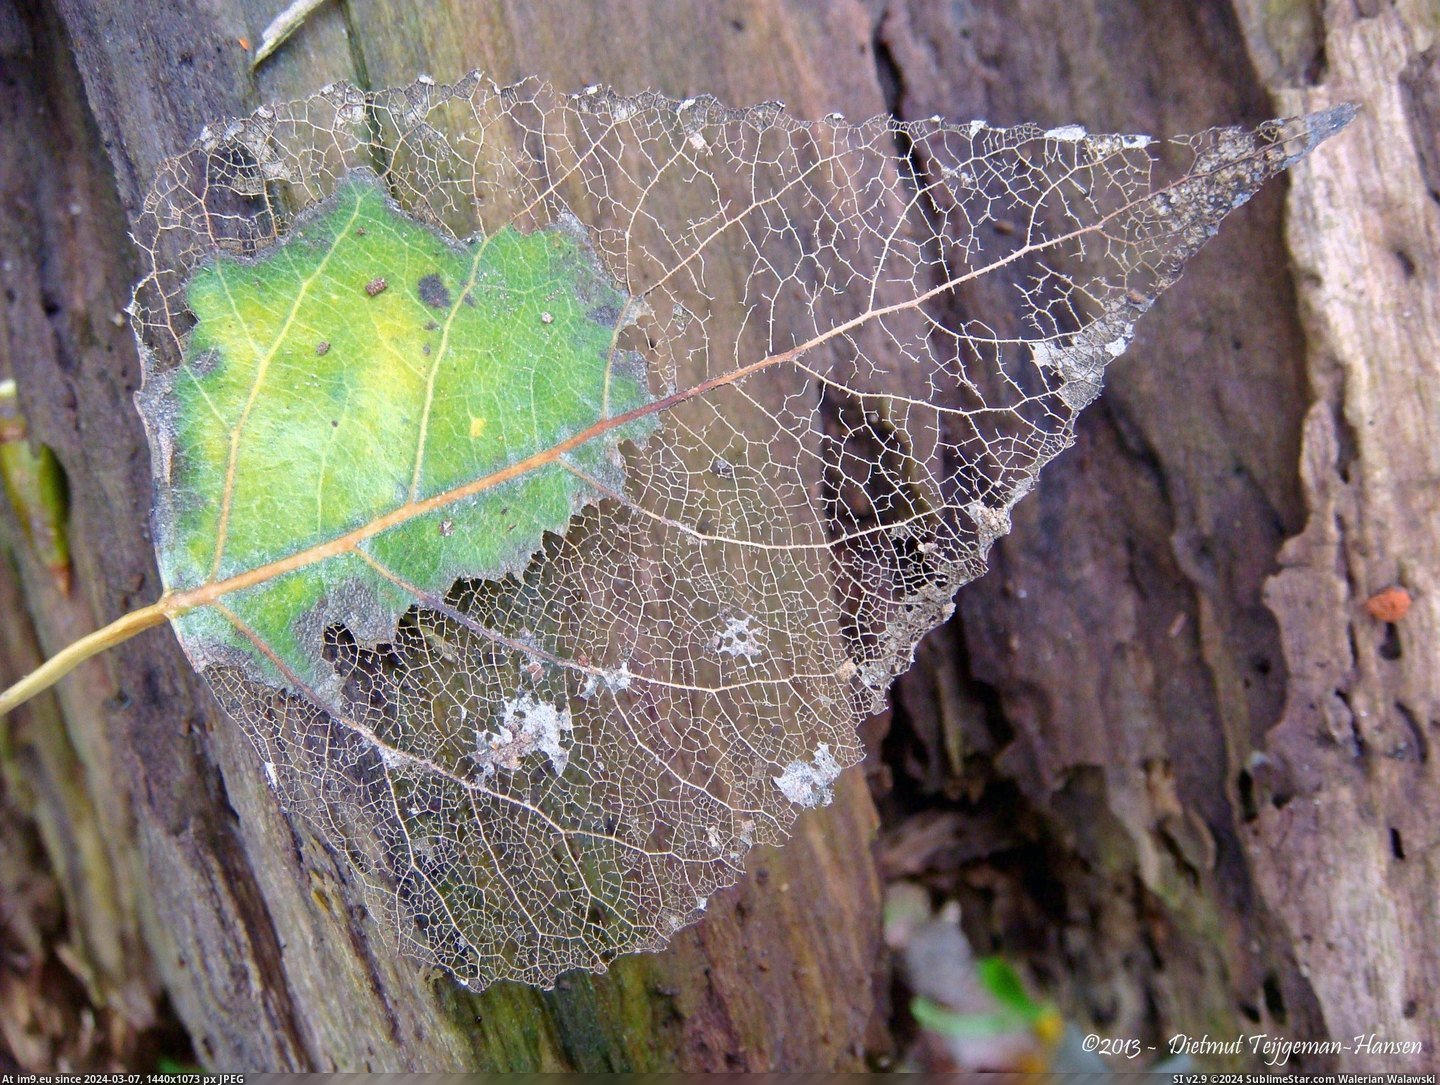 #Leaf  #Deteriorating [Pics] Deteriorating Leaf Pic. (Изображение из альбом My r/PICS favs))